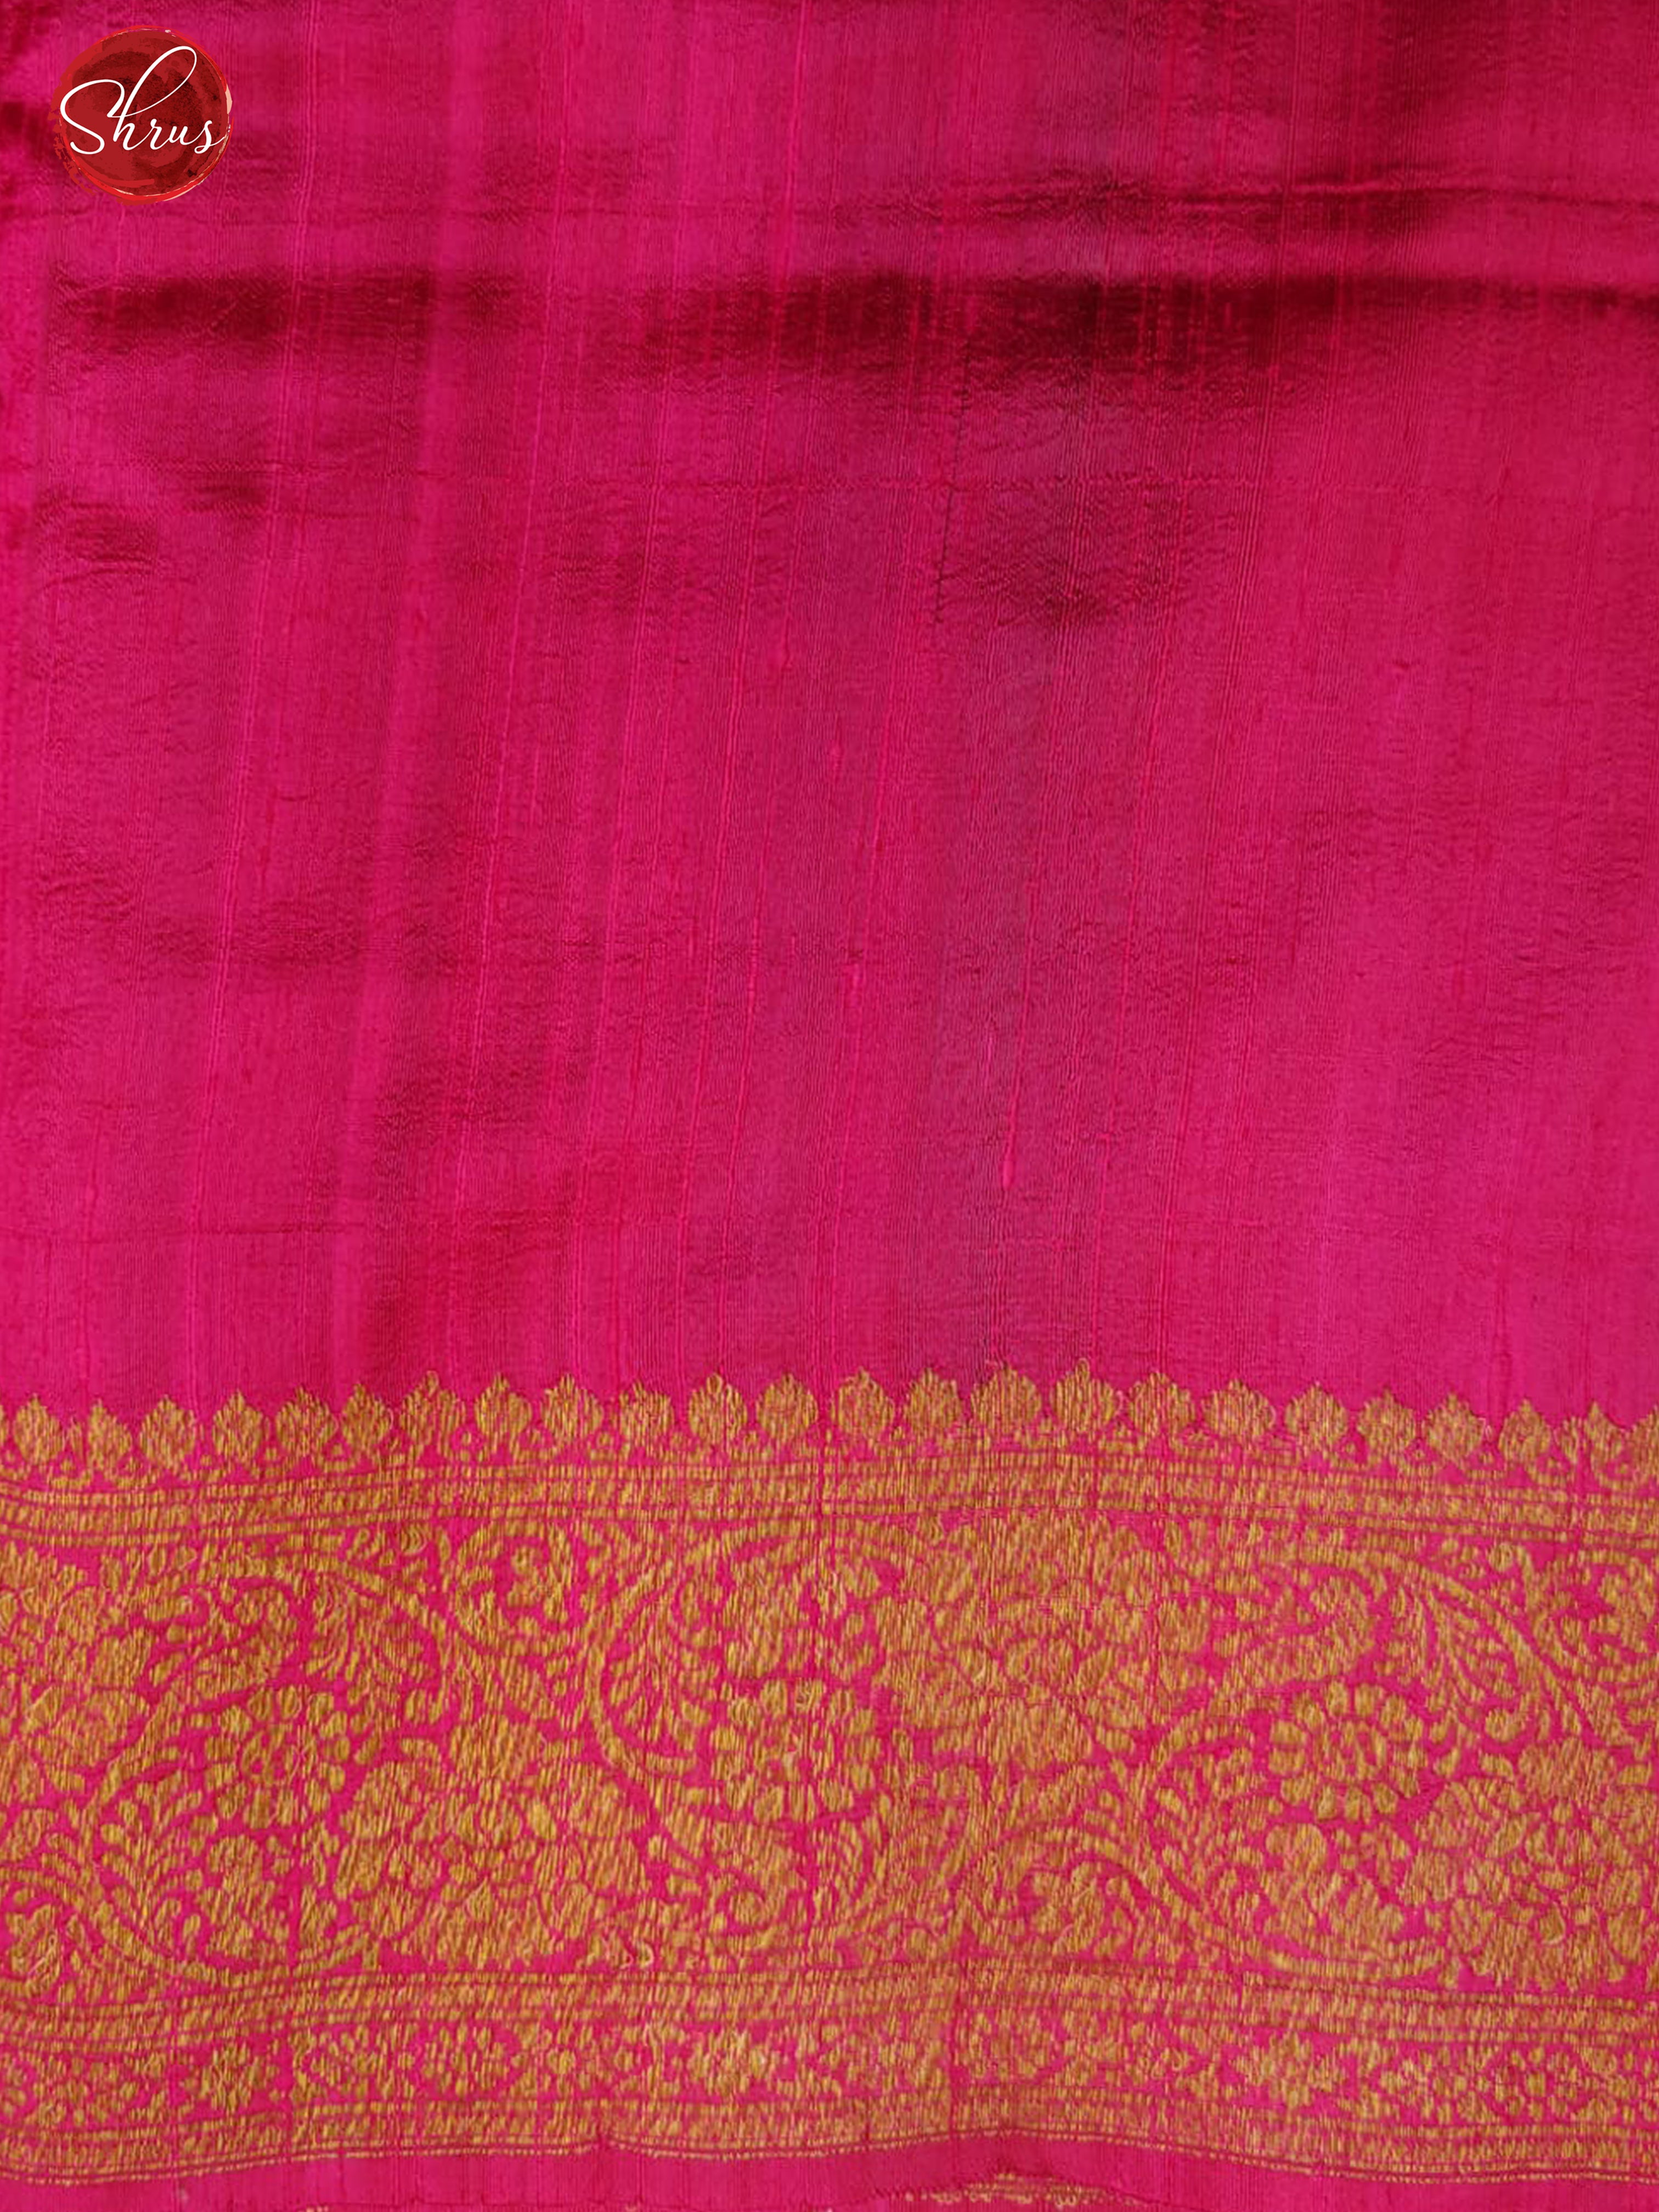 Green & Pink - Dupion with zari floral motifs on the body & Contrast Zari Border - Shop on ShrusEternity.com